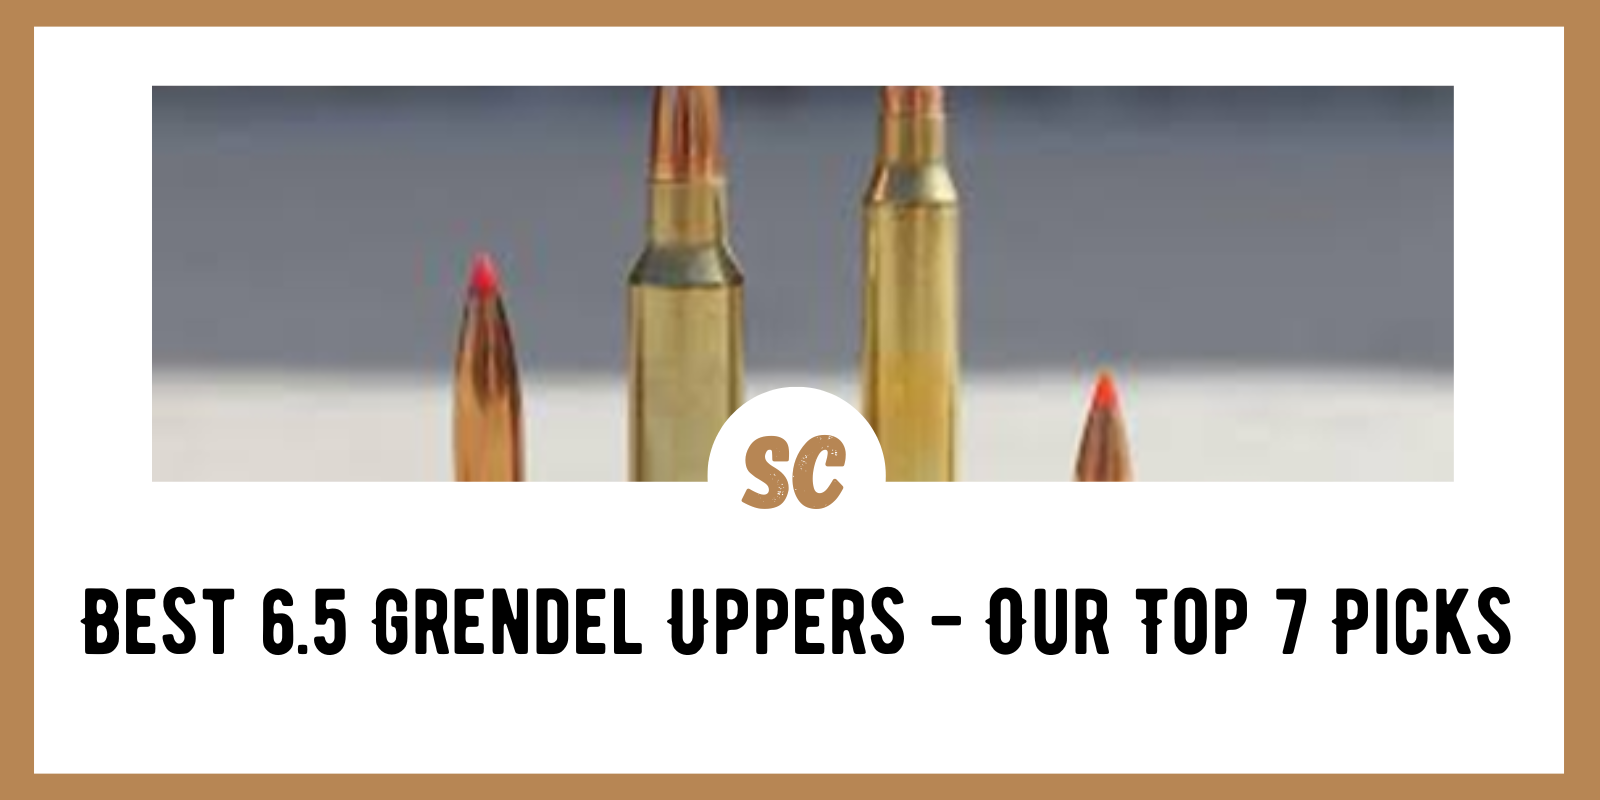 Best 6.5 Grendel Uppers – Our Top 7 Picks